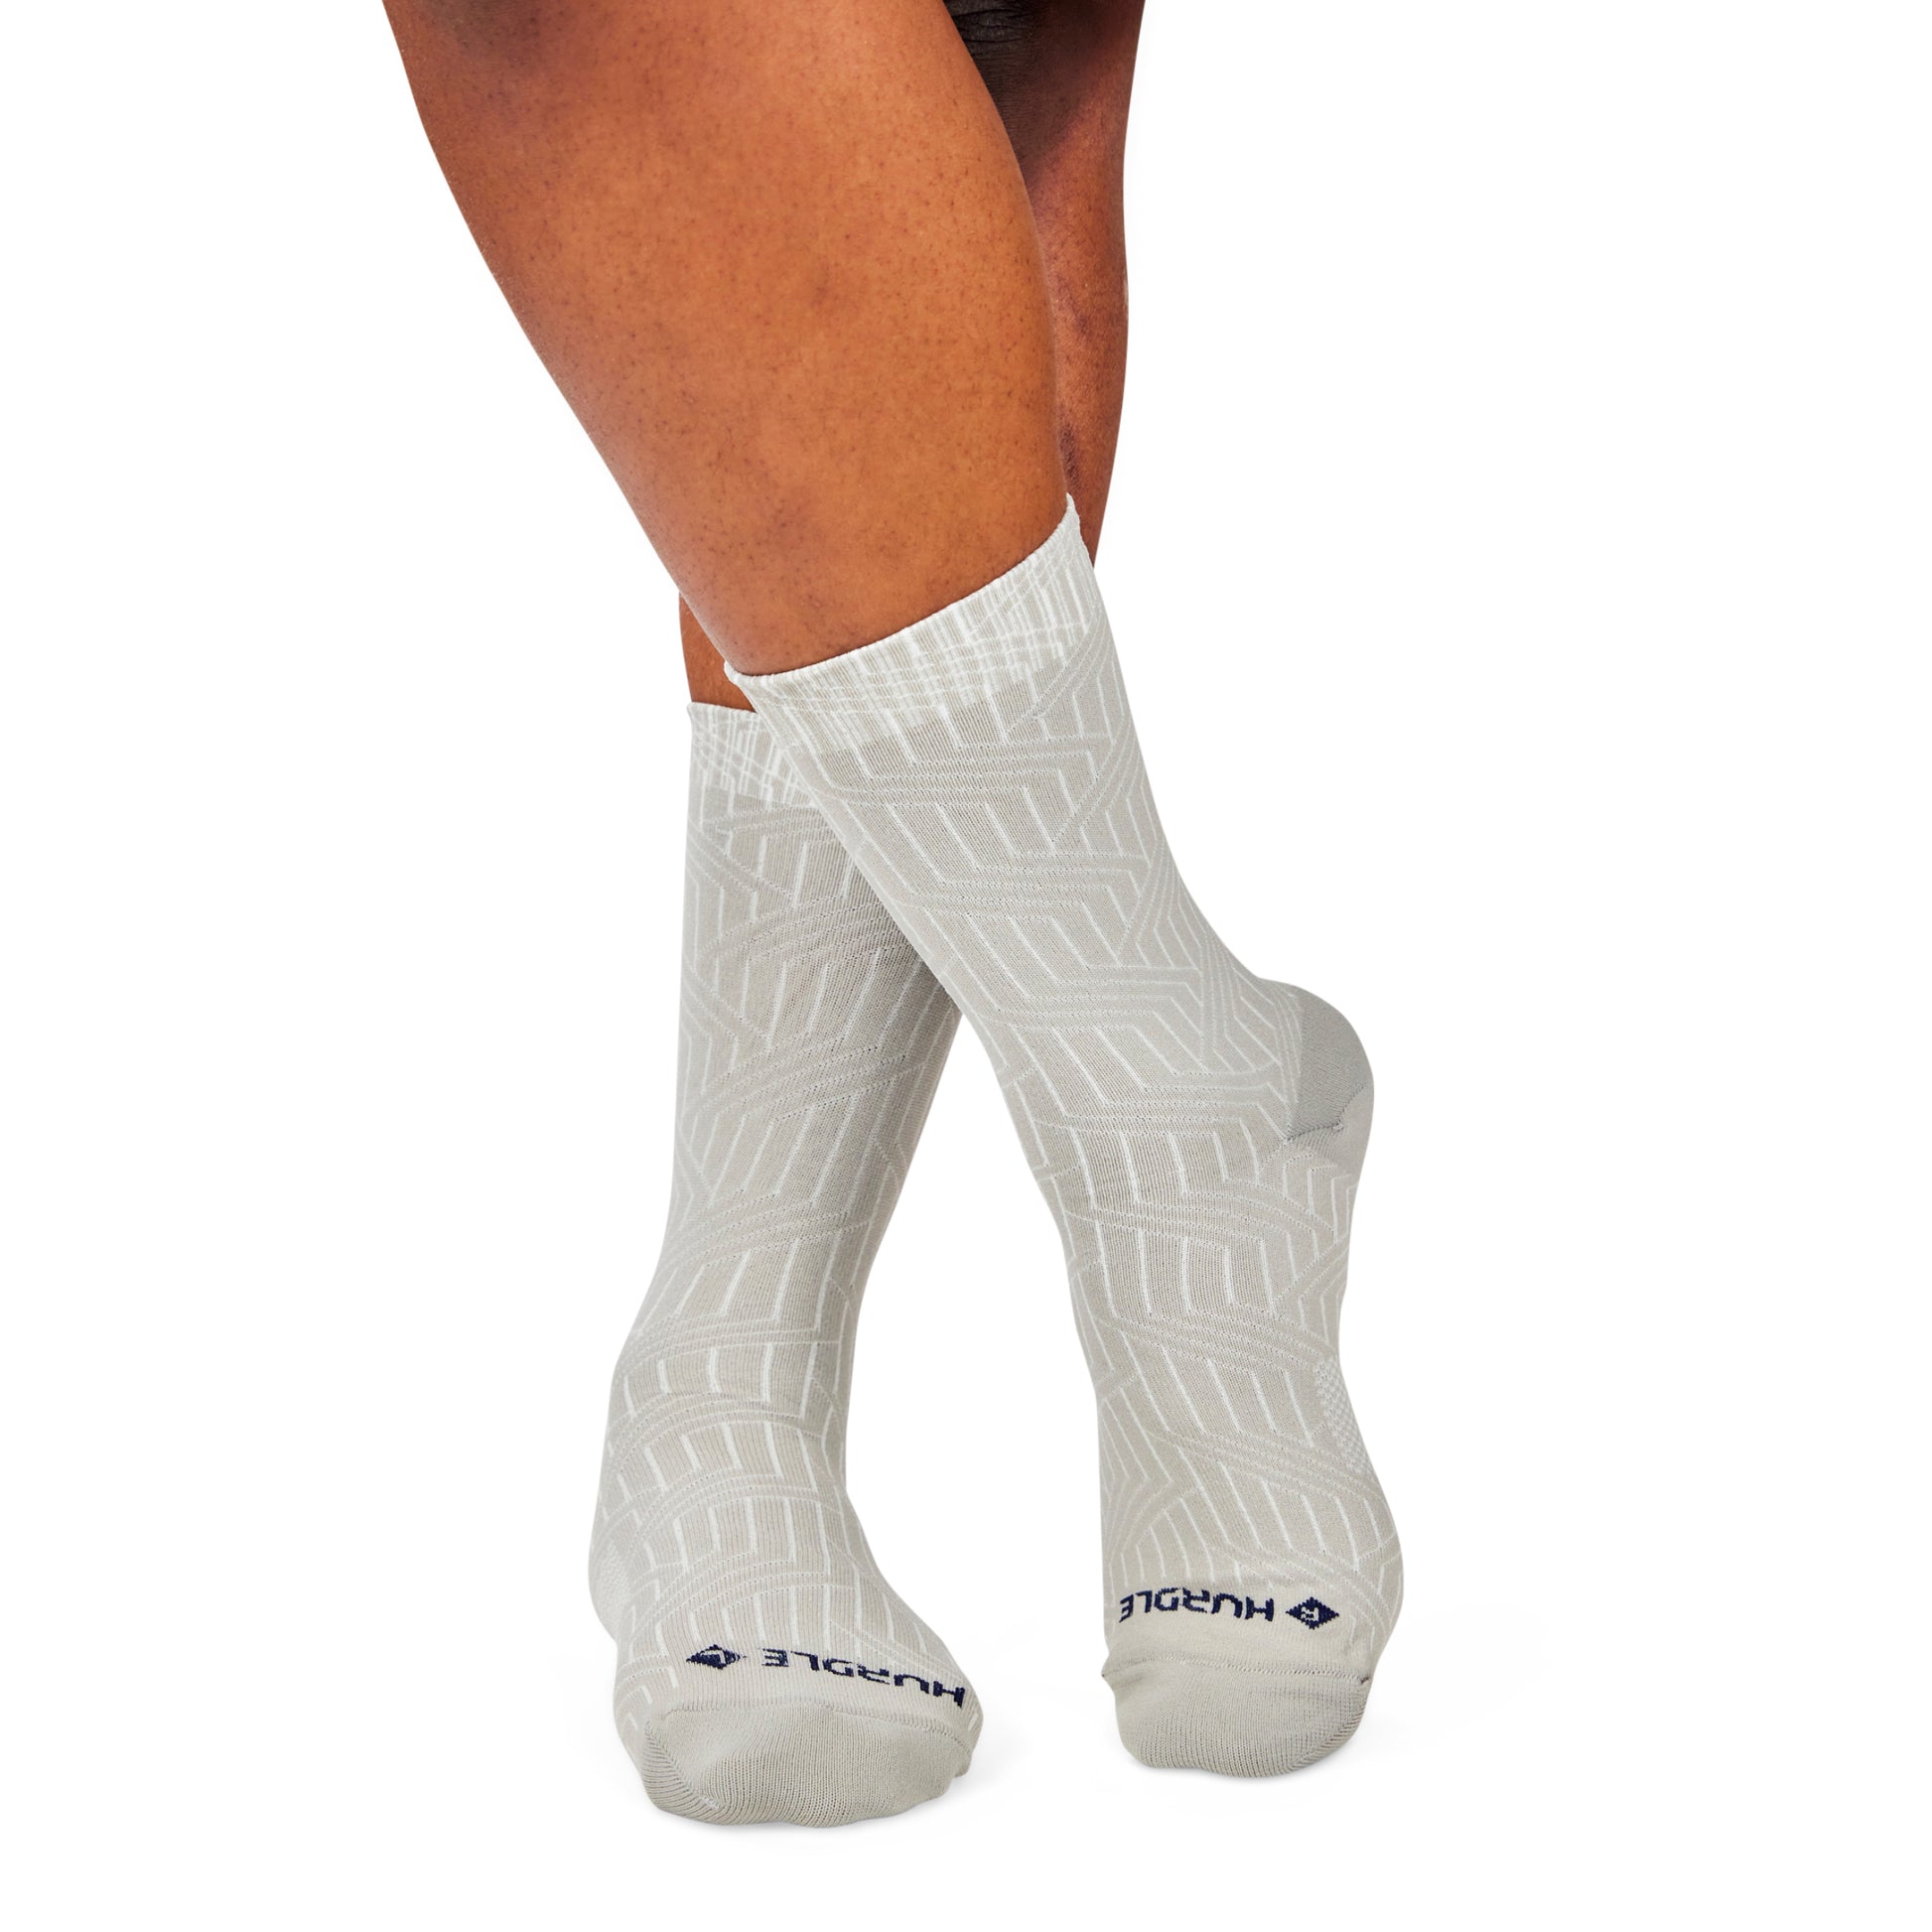 Hurdle Men's White Ankle Socks (L) Ventilating, Odor Reducing, Blister Protection, Comfort Fit